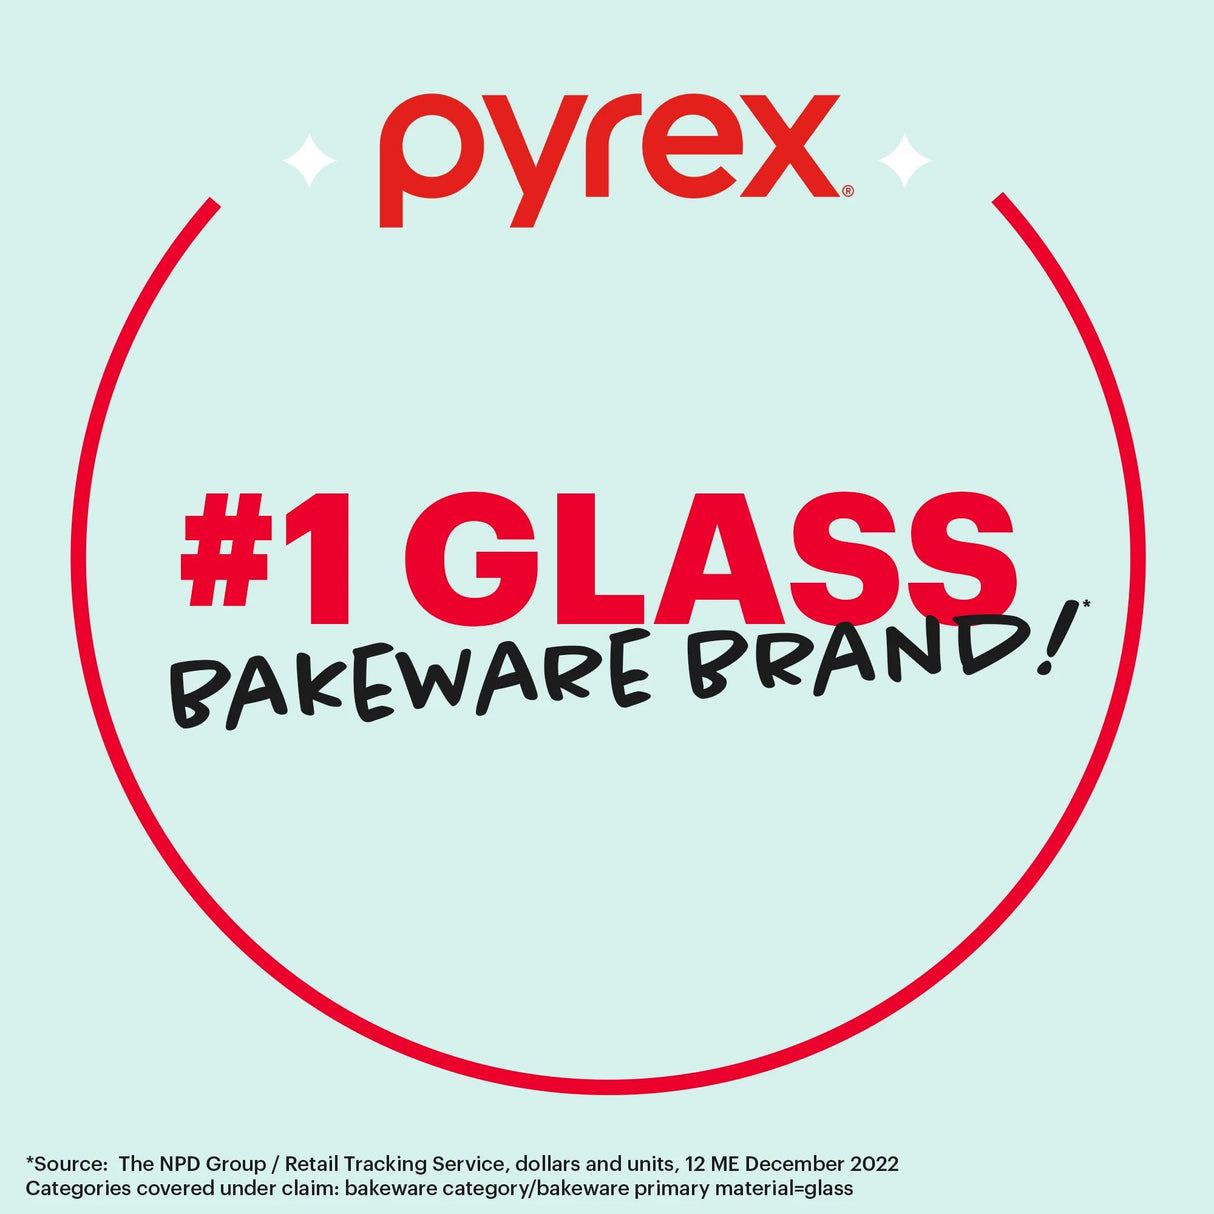  Pyrex #1 Glass Bakeware Brand!